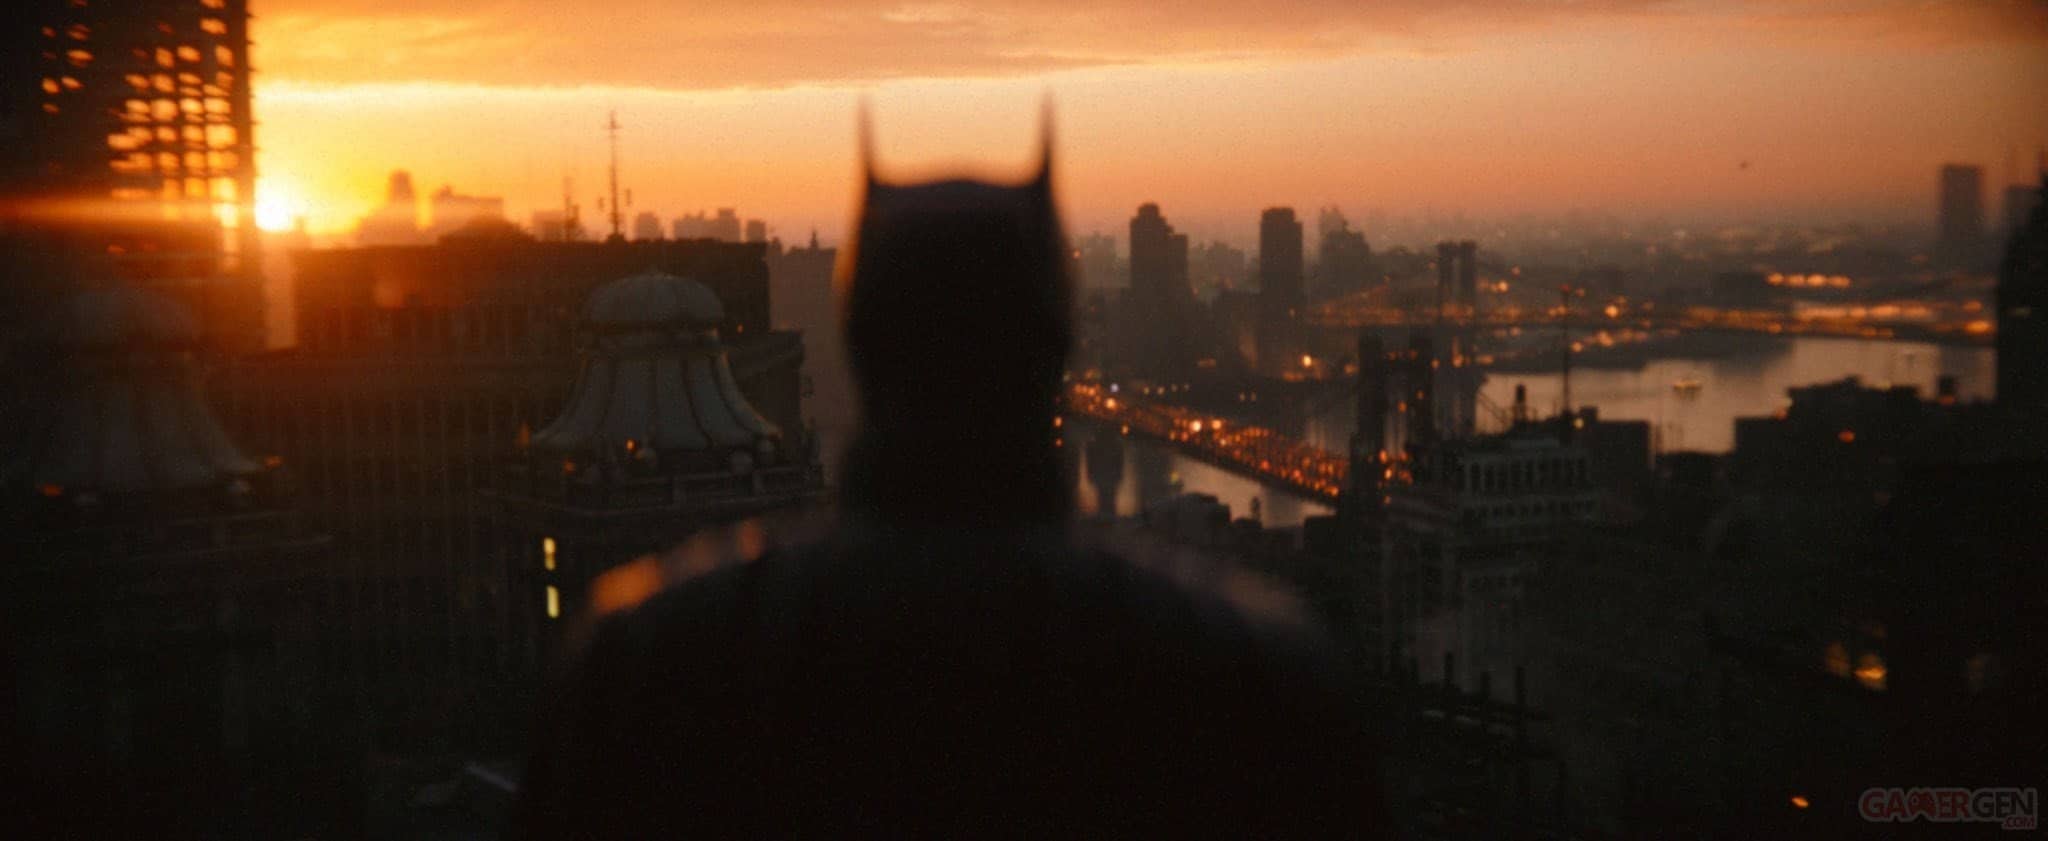 The Batman s’inspire d’un film culte de Martin Scorsese